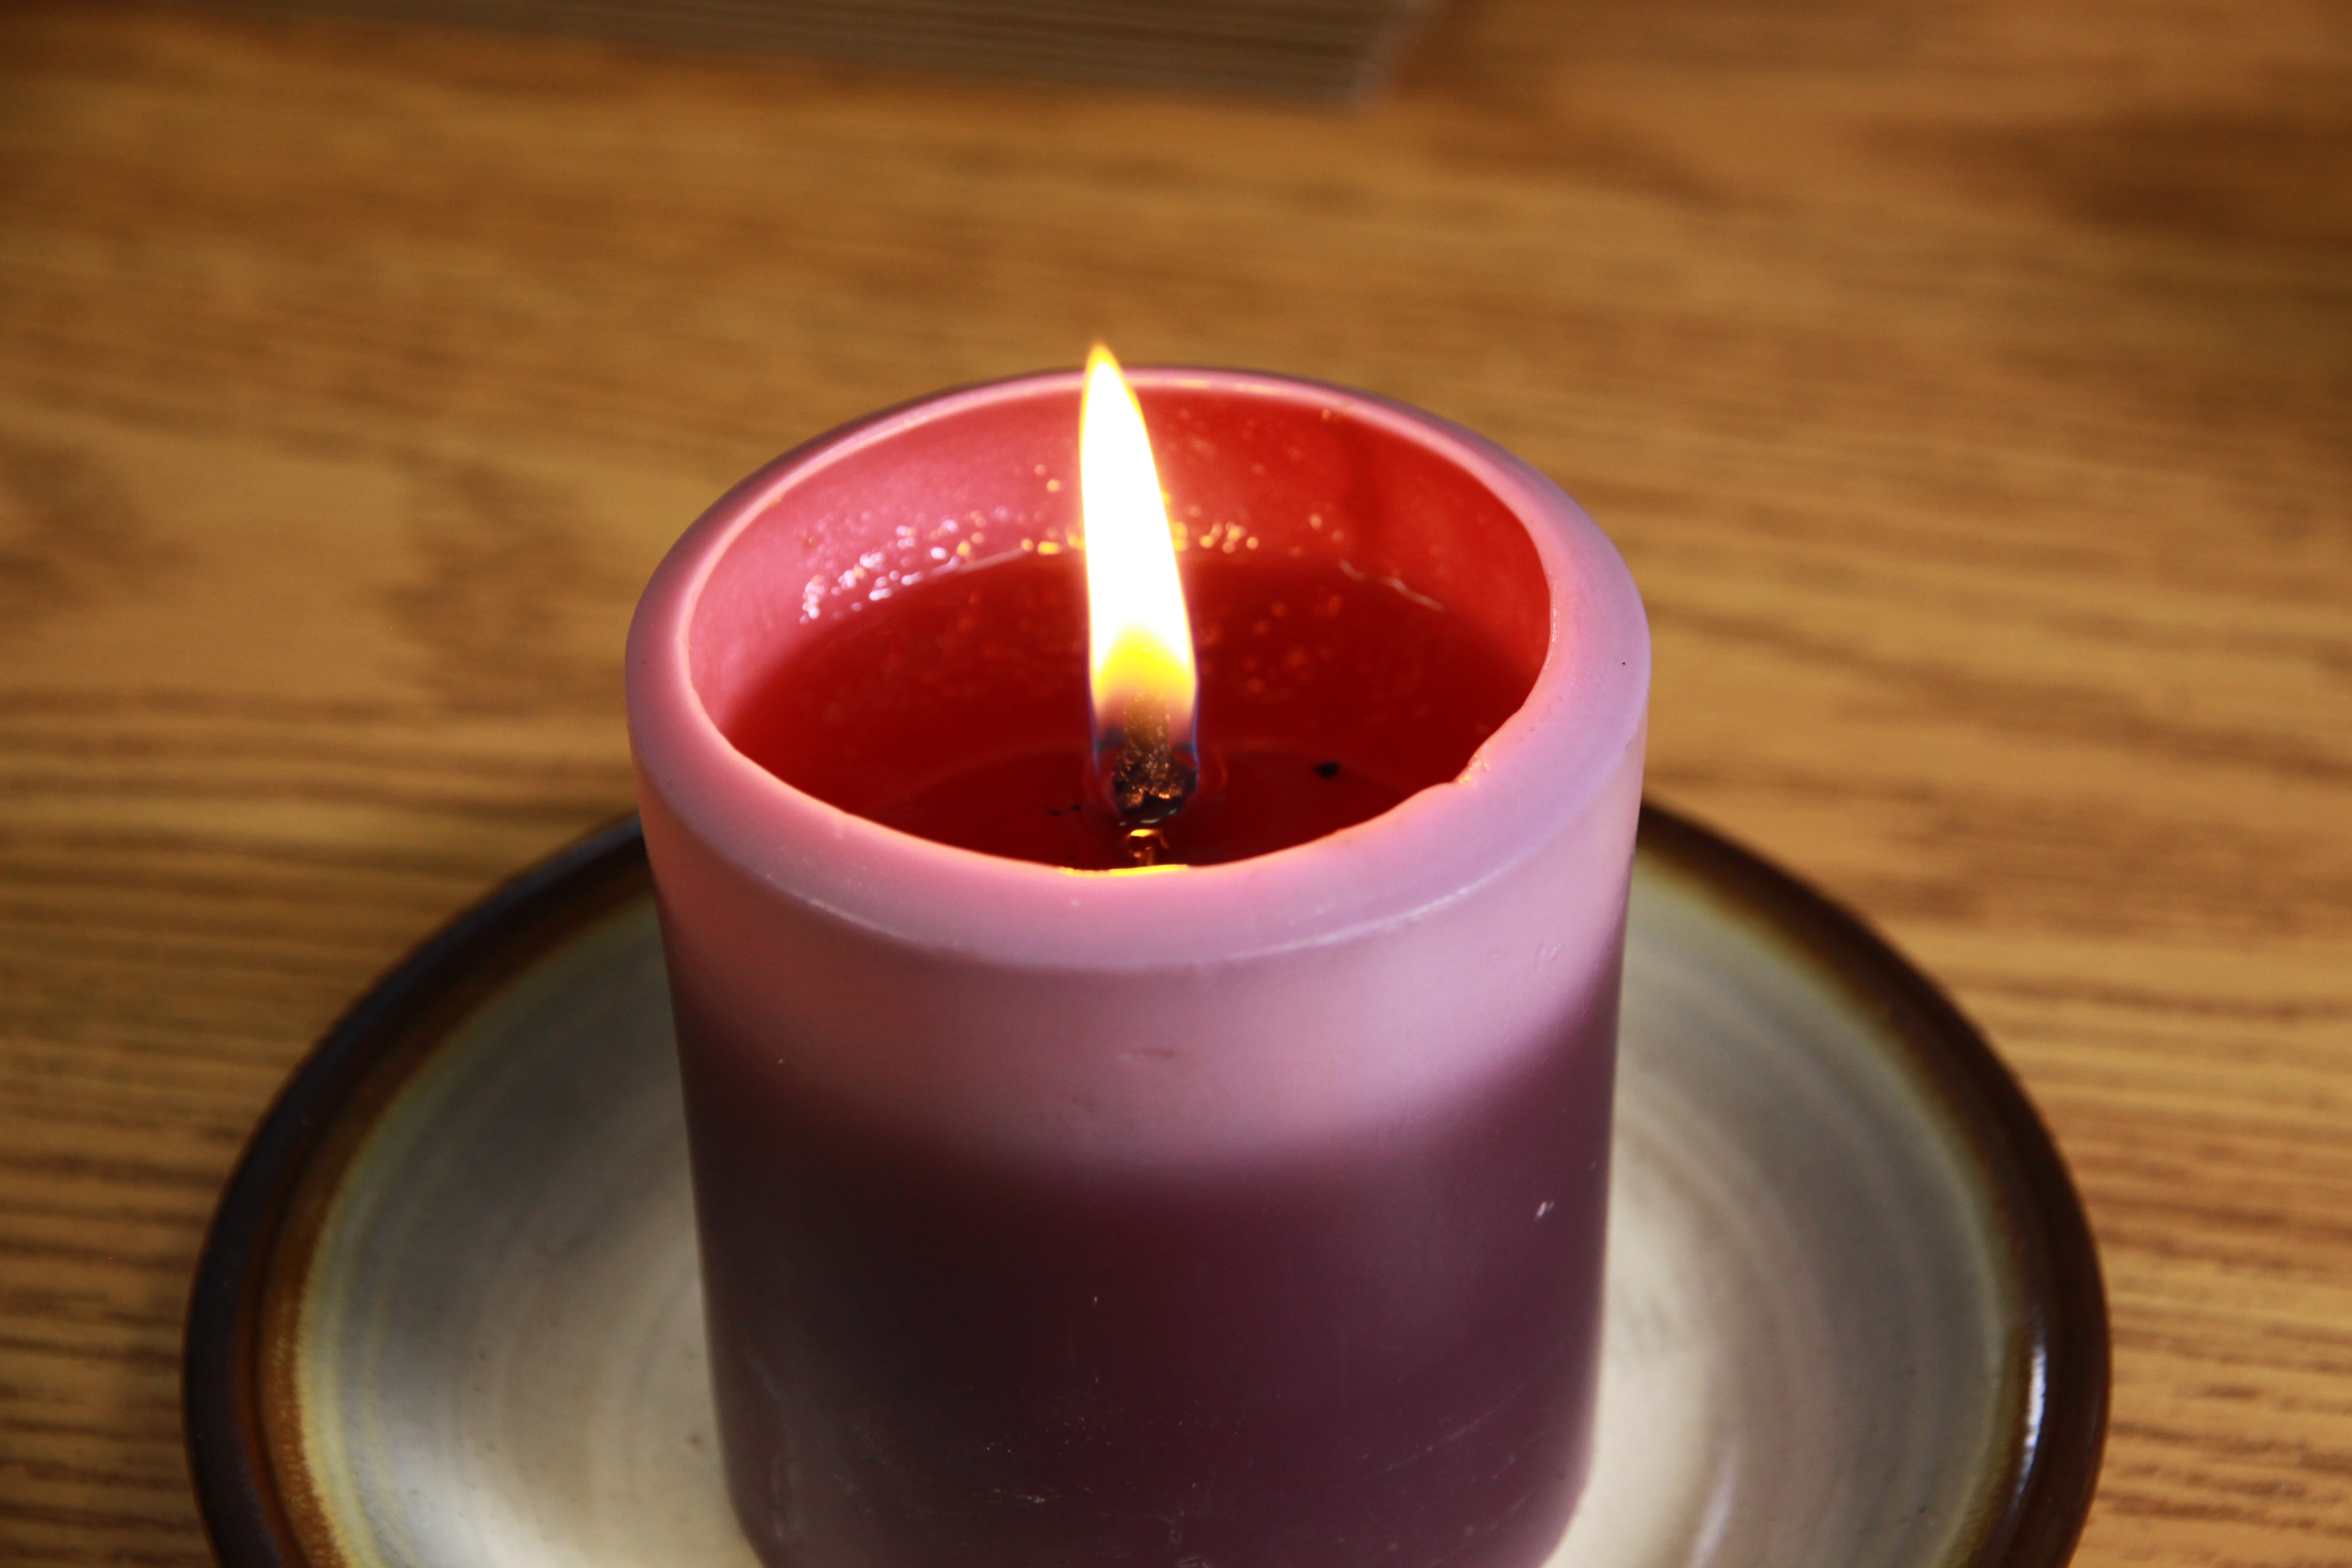 How do I properly burn a Pillar Candle?